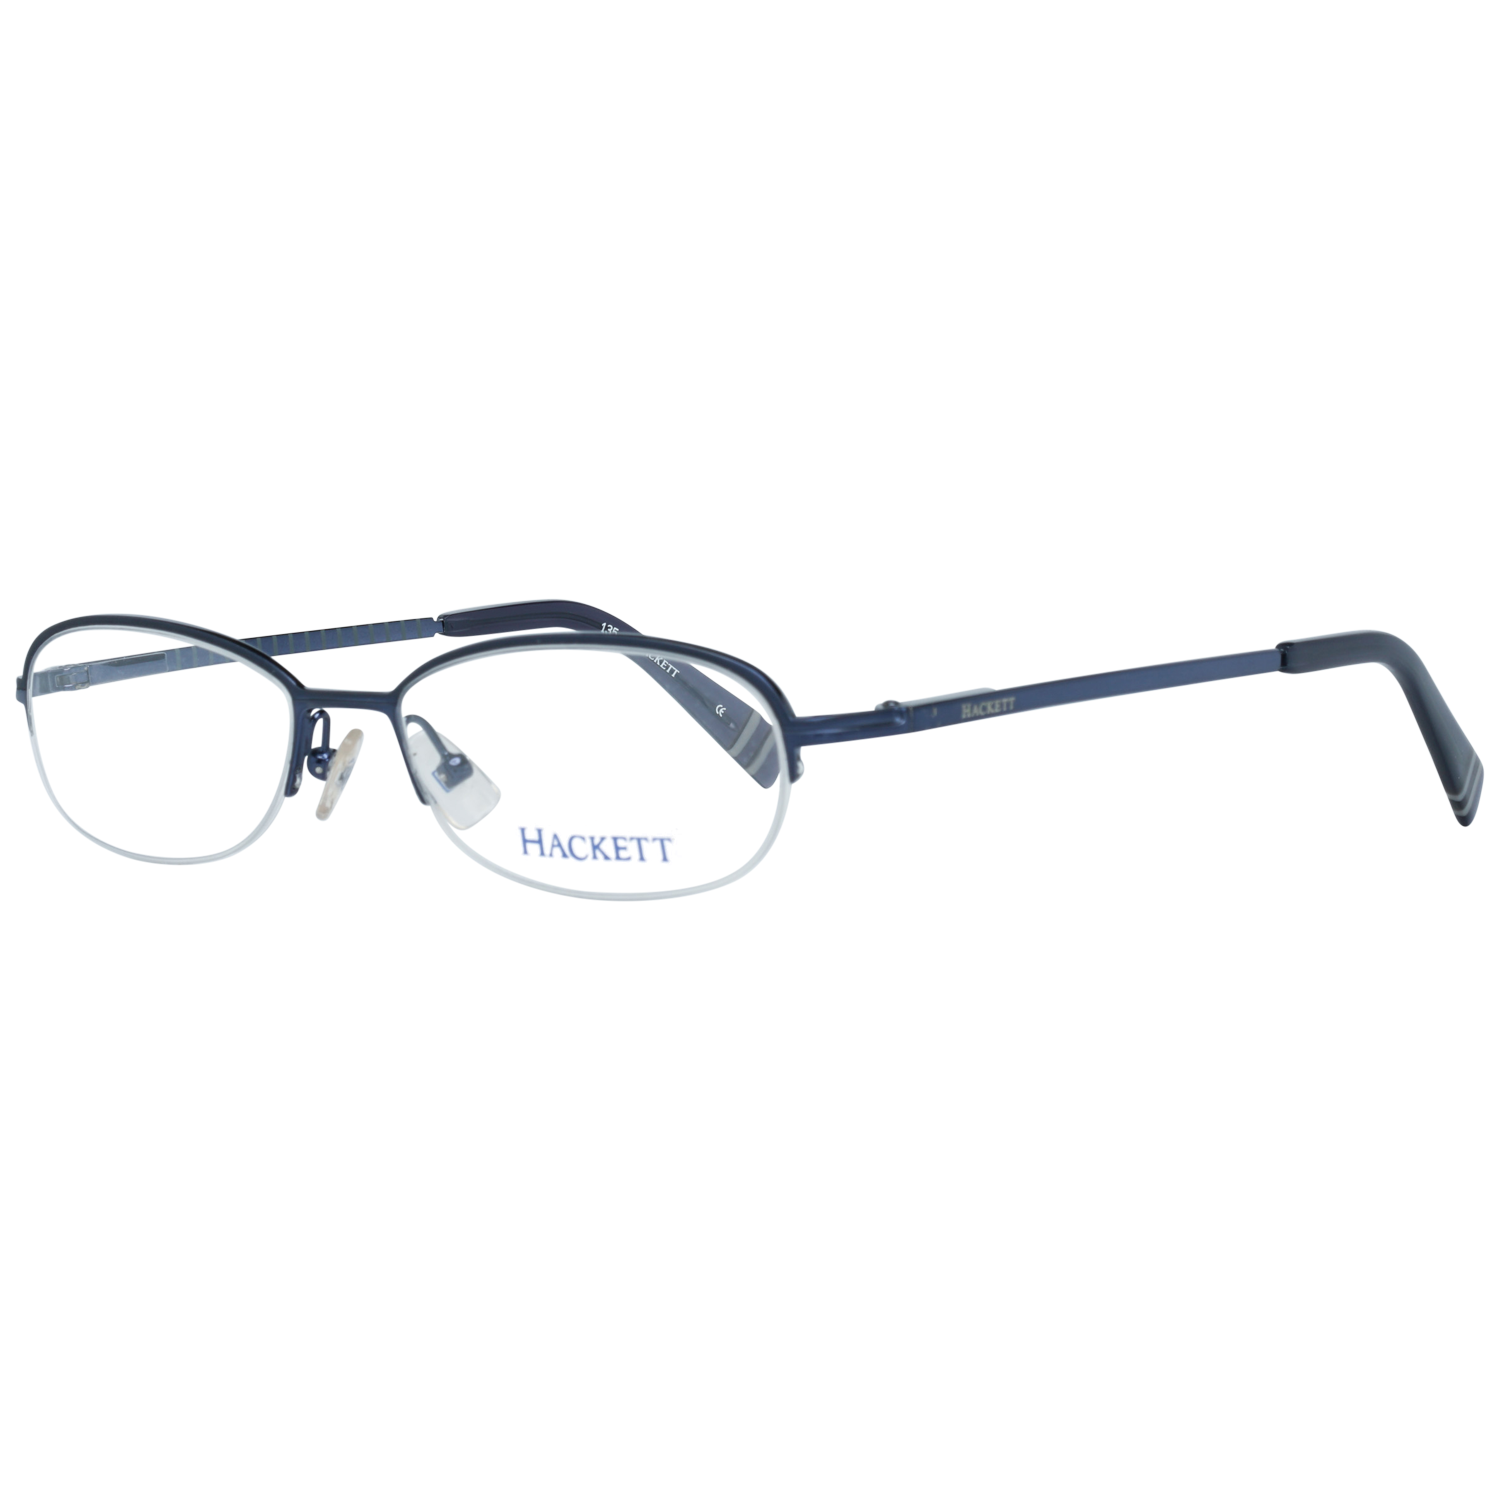 Hackett Frames Hackett Optical Frame HEK1011 060 51 Eyeglasses Eyewear UK USA Australia 